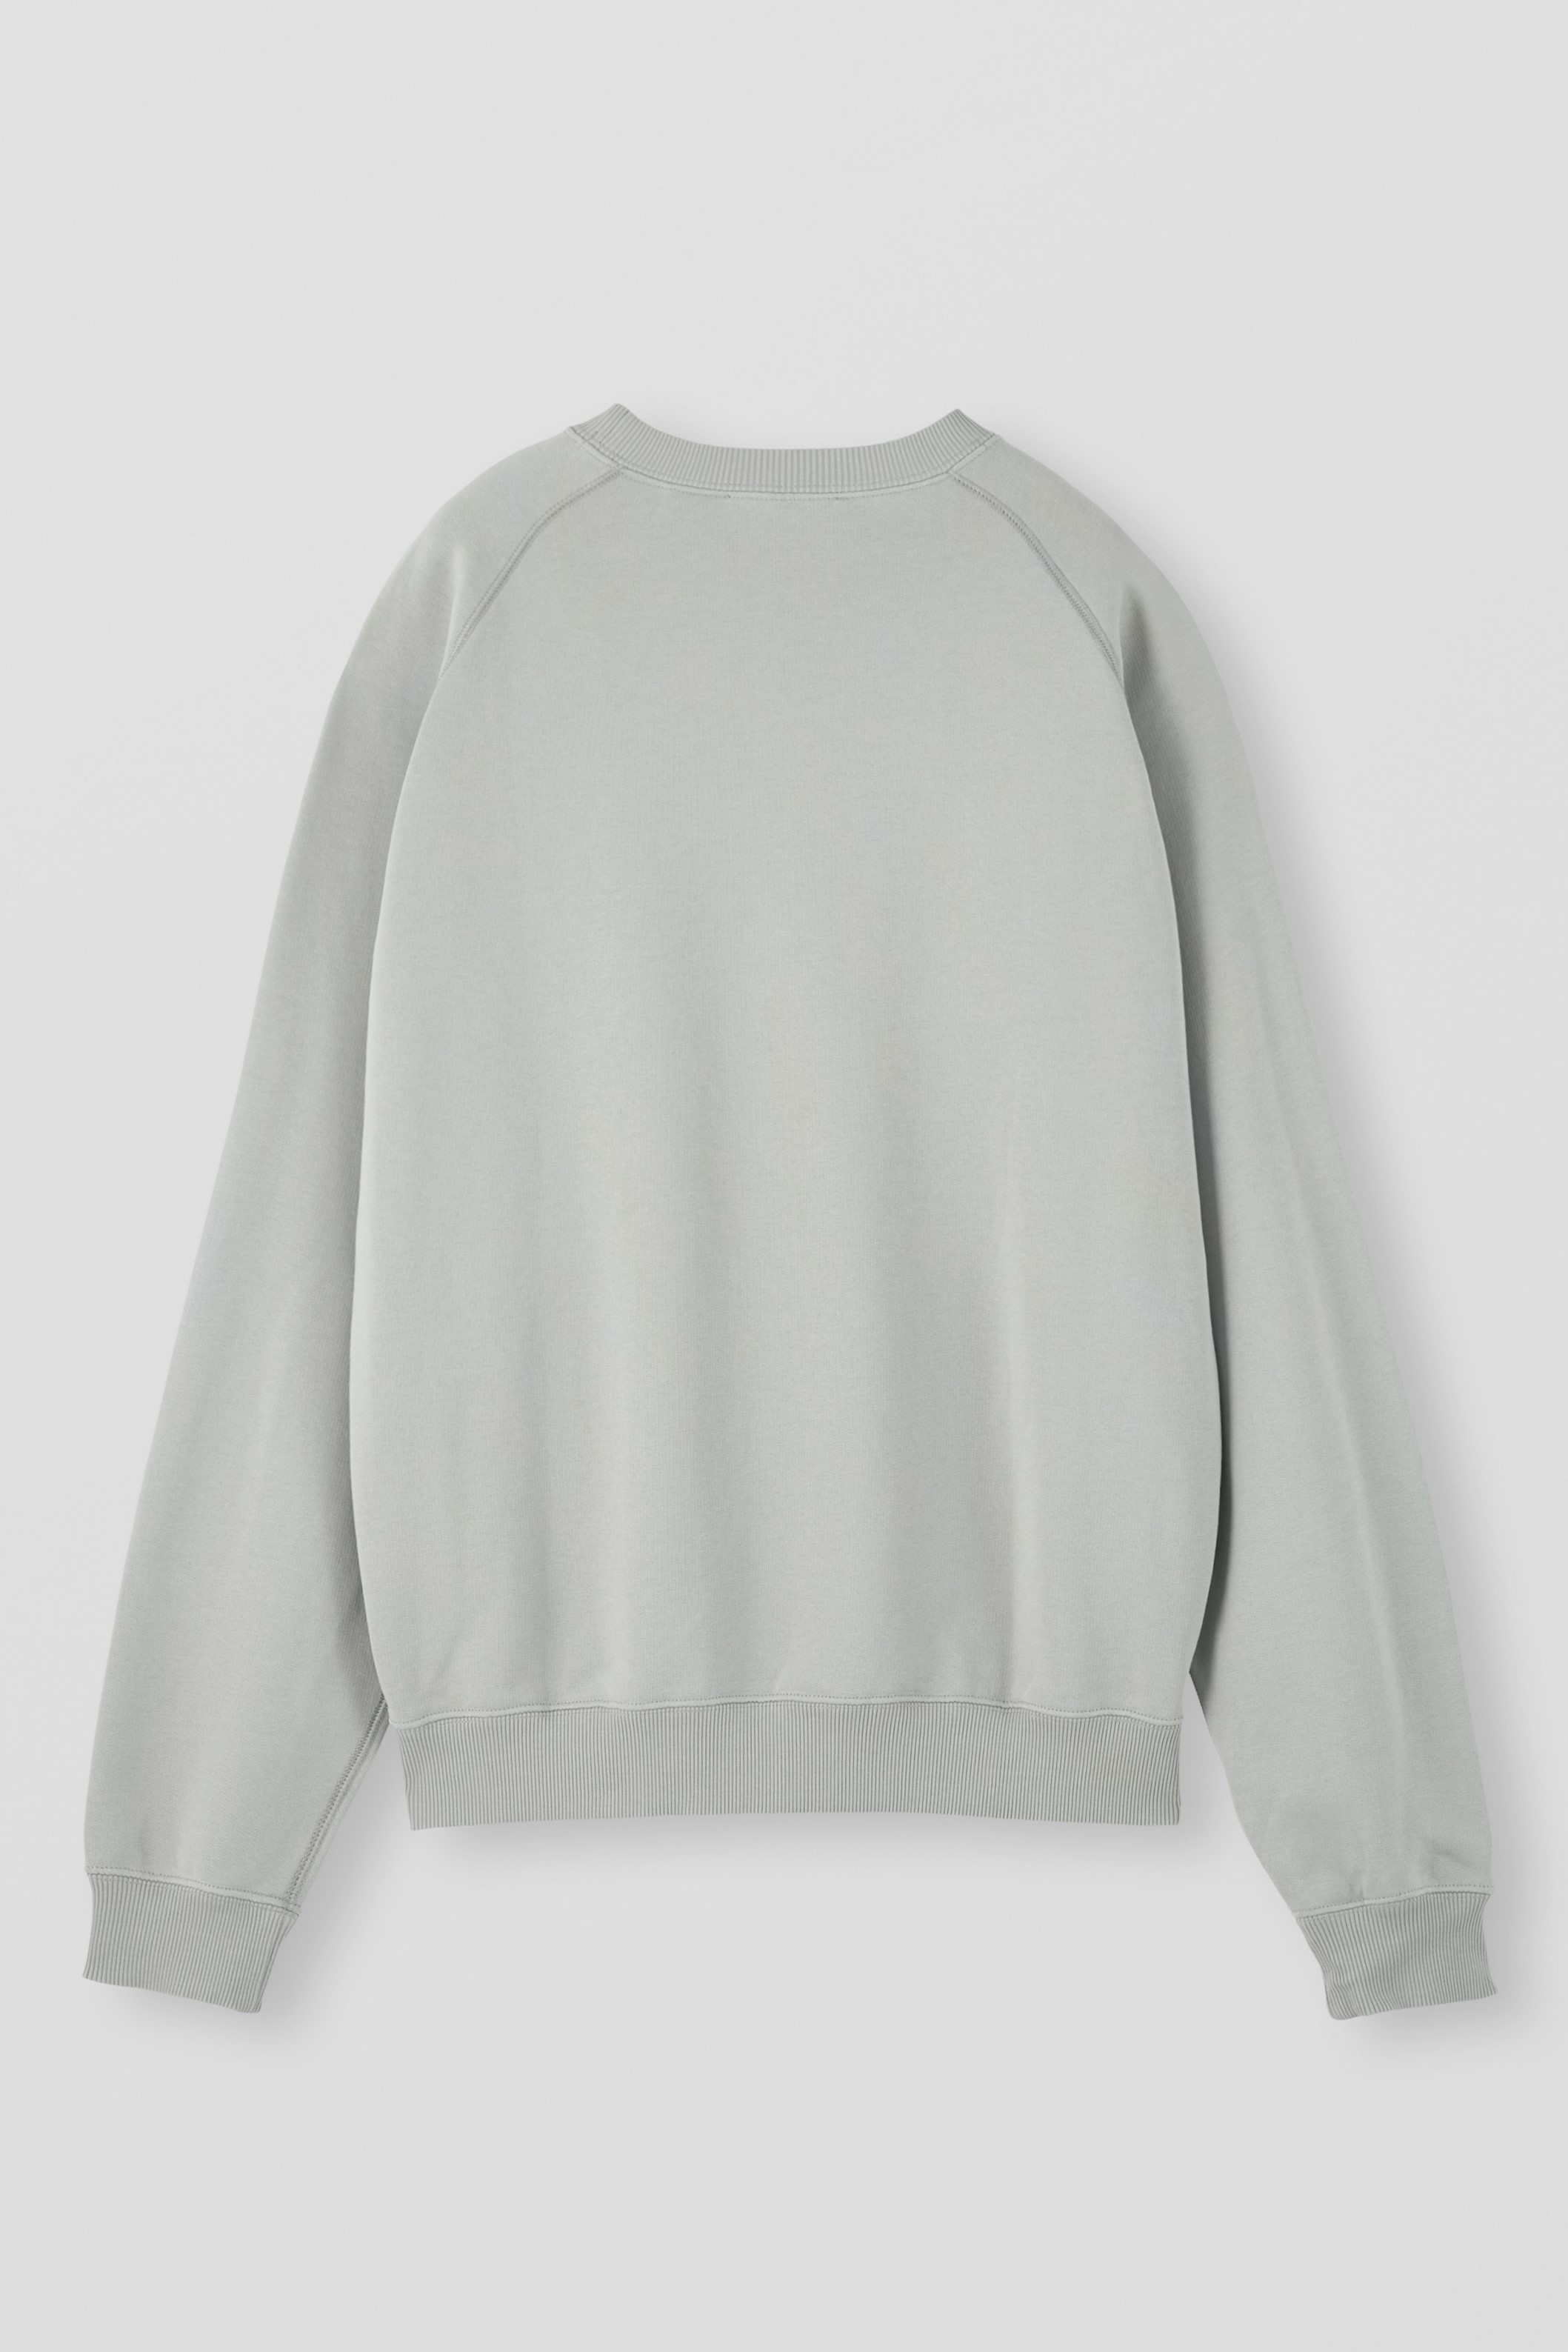 APPLIED ART FORMS Raglan Sweater in Ghost Grey S